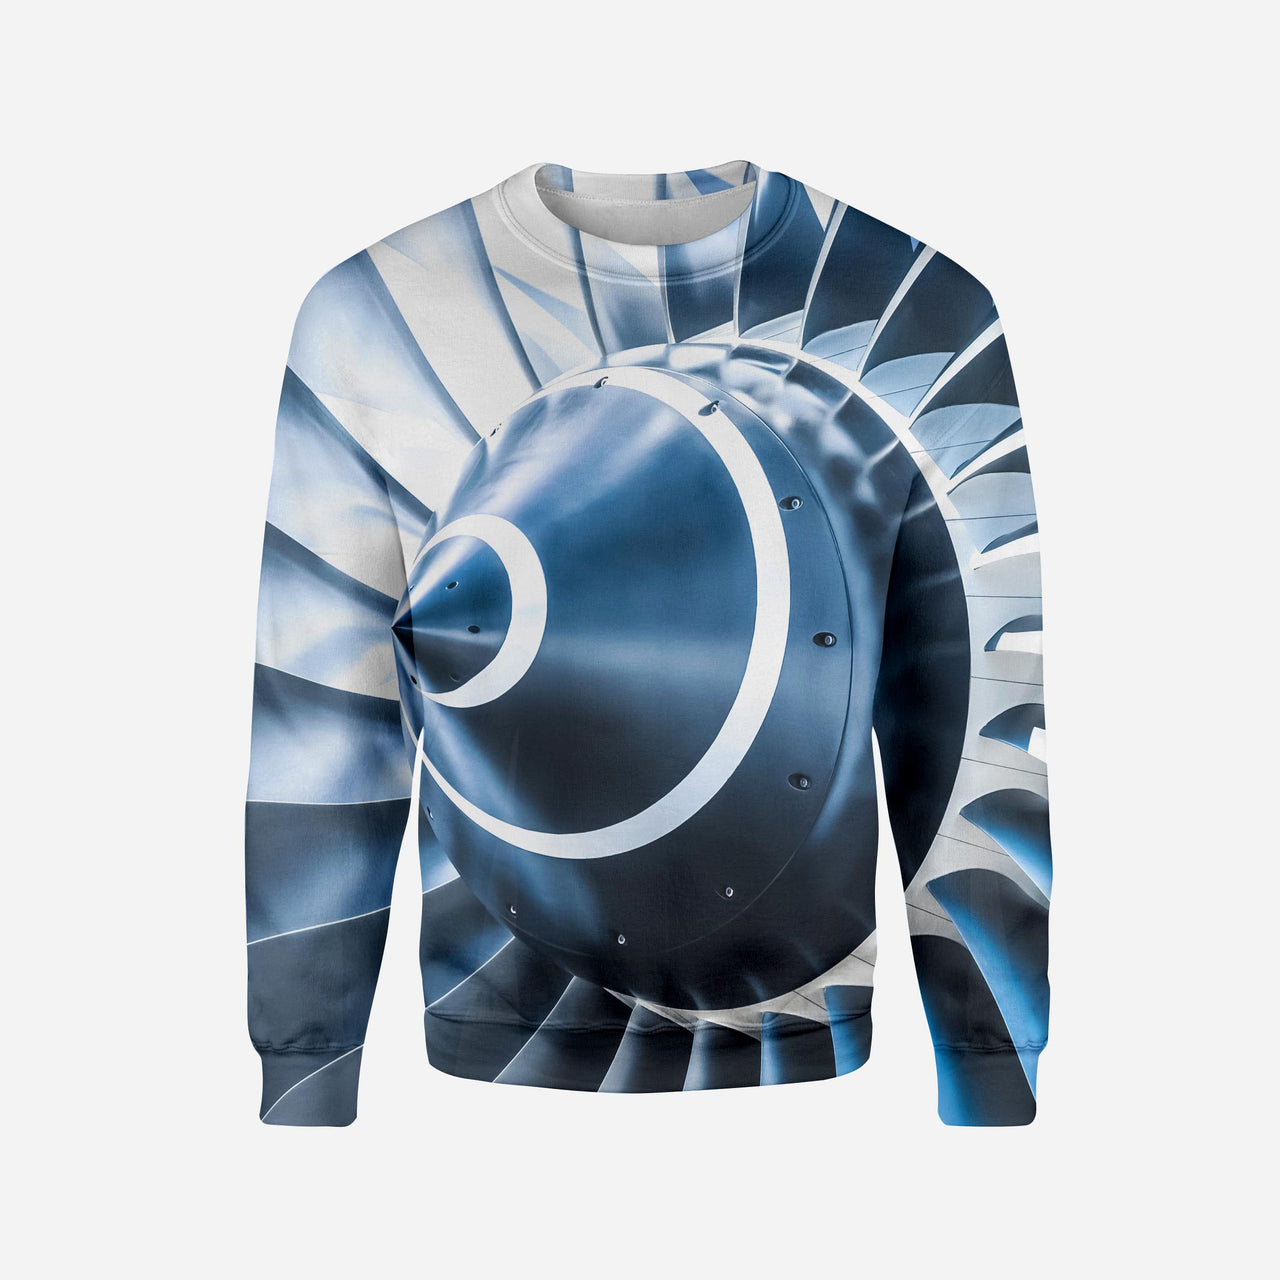 Blue Toned Super Jet Engine Blades Closeup Printed 3D Sweatshirts